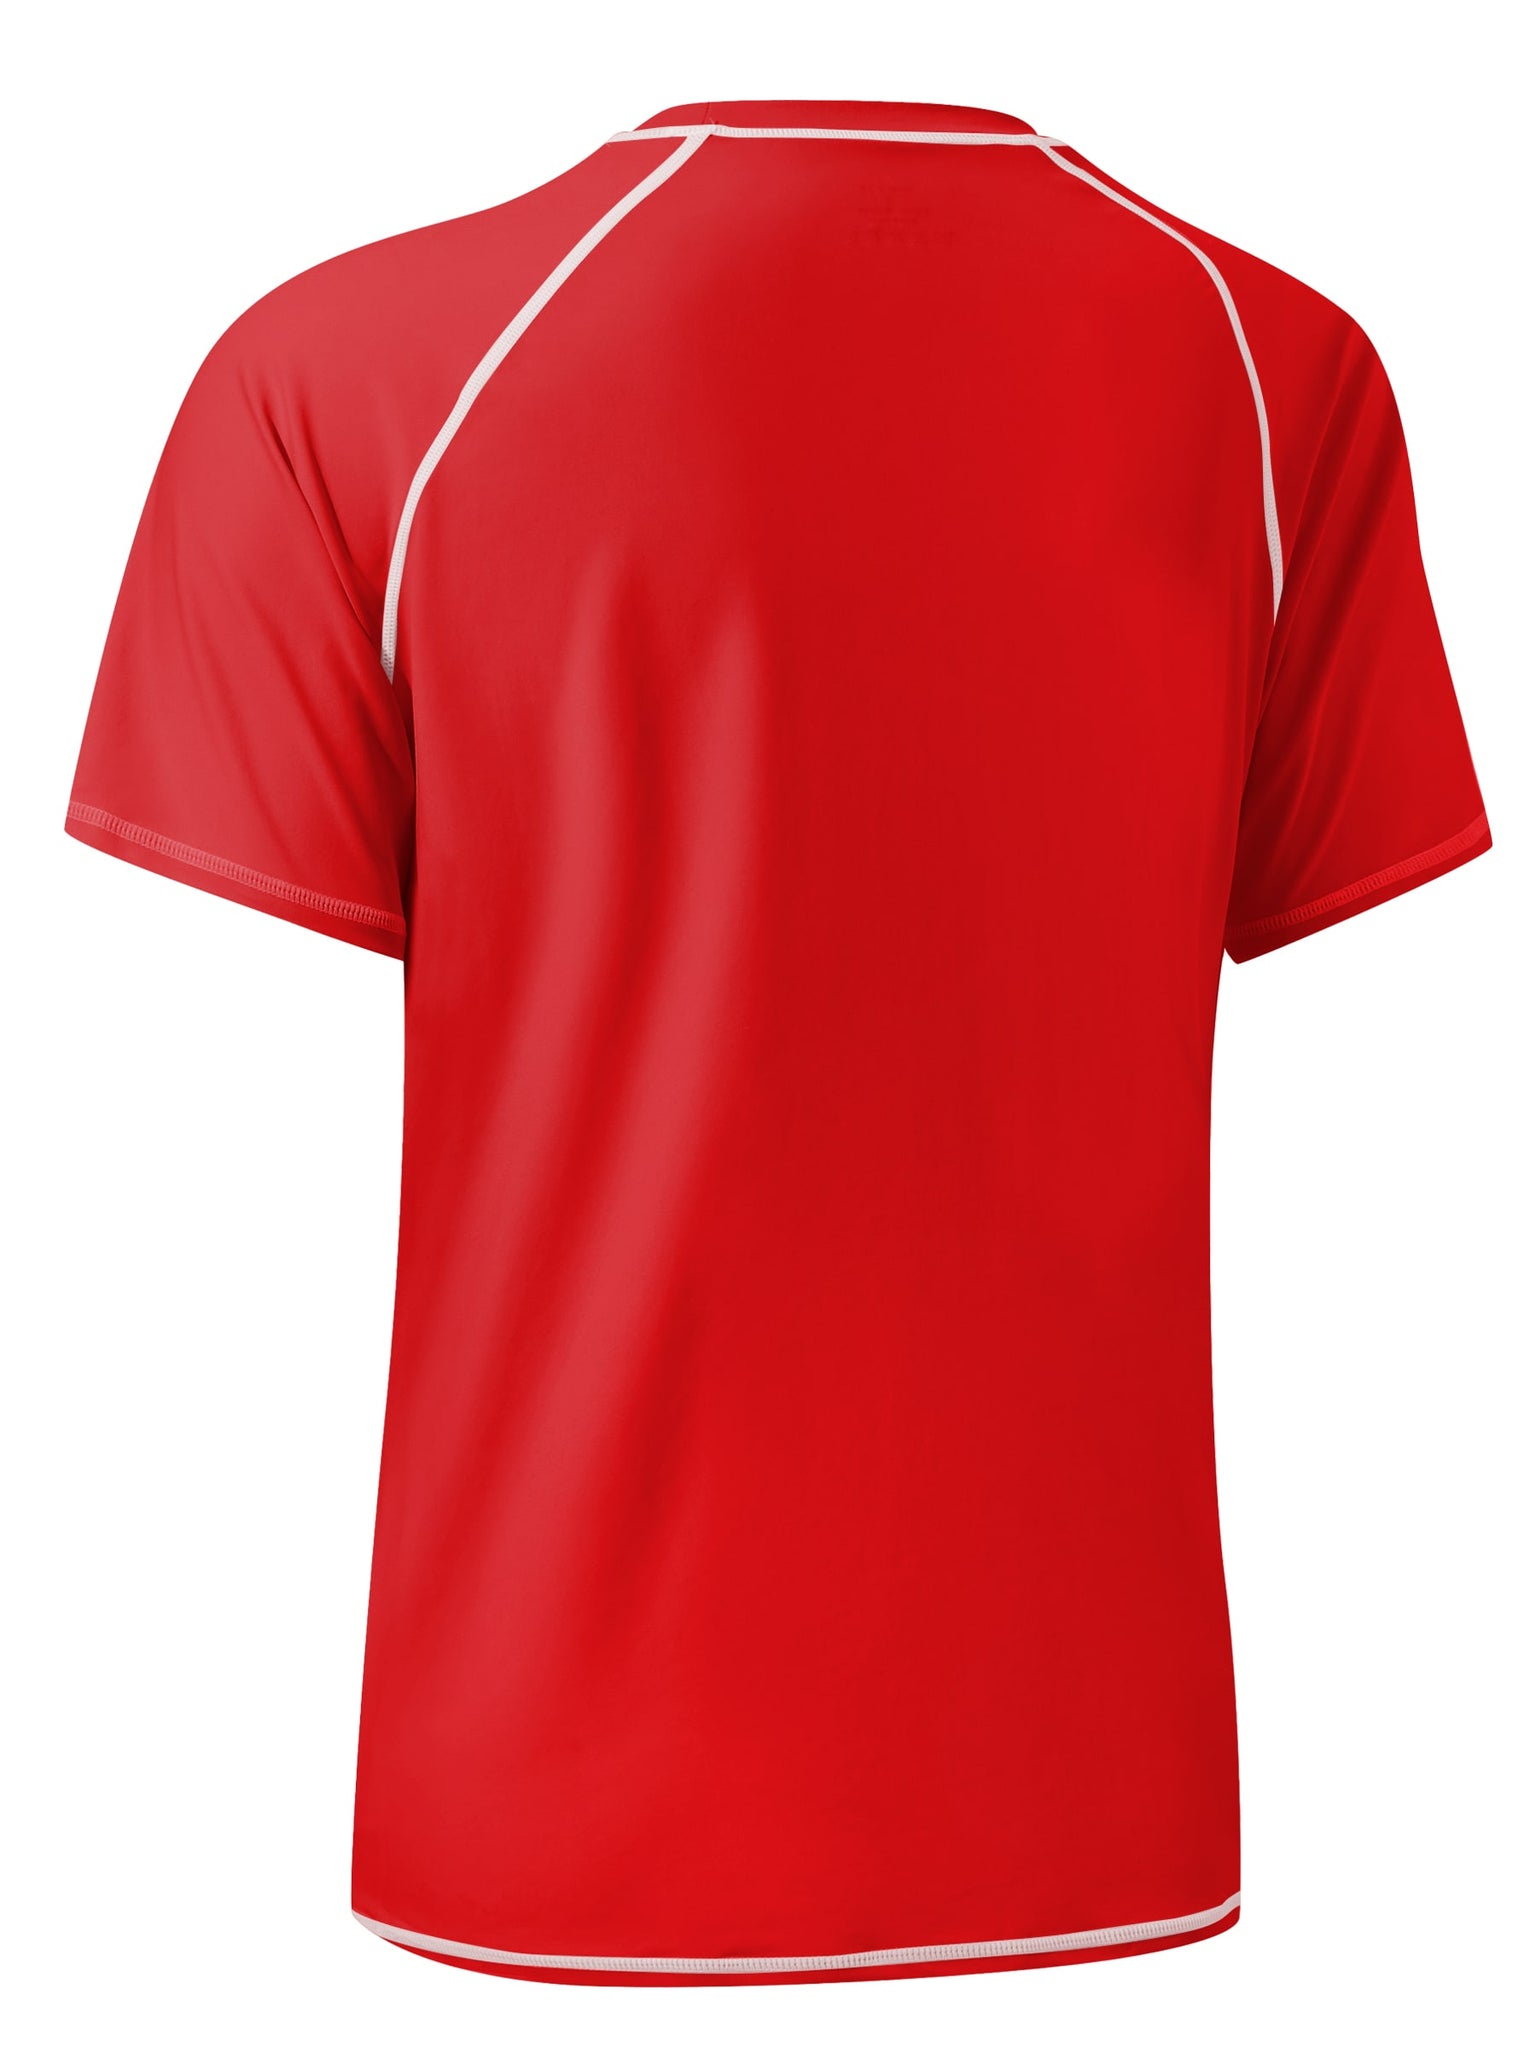 Men's Sun Protection Short Sleeve Shirt_Red_laydown2